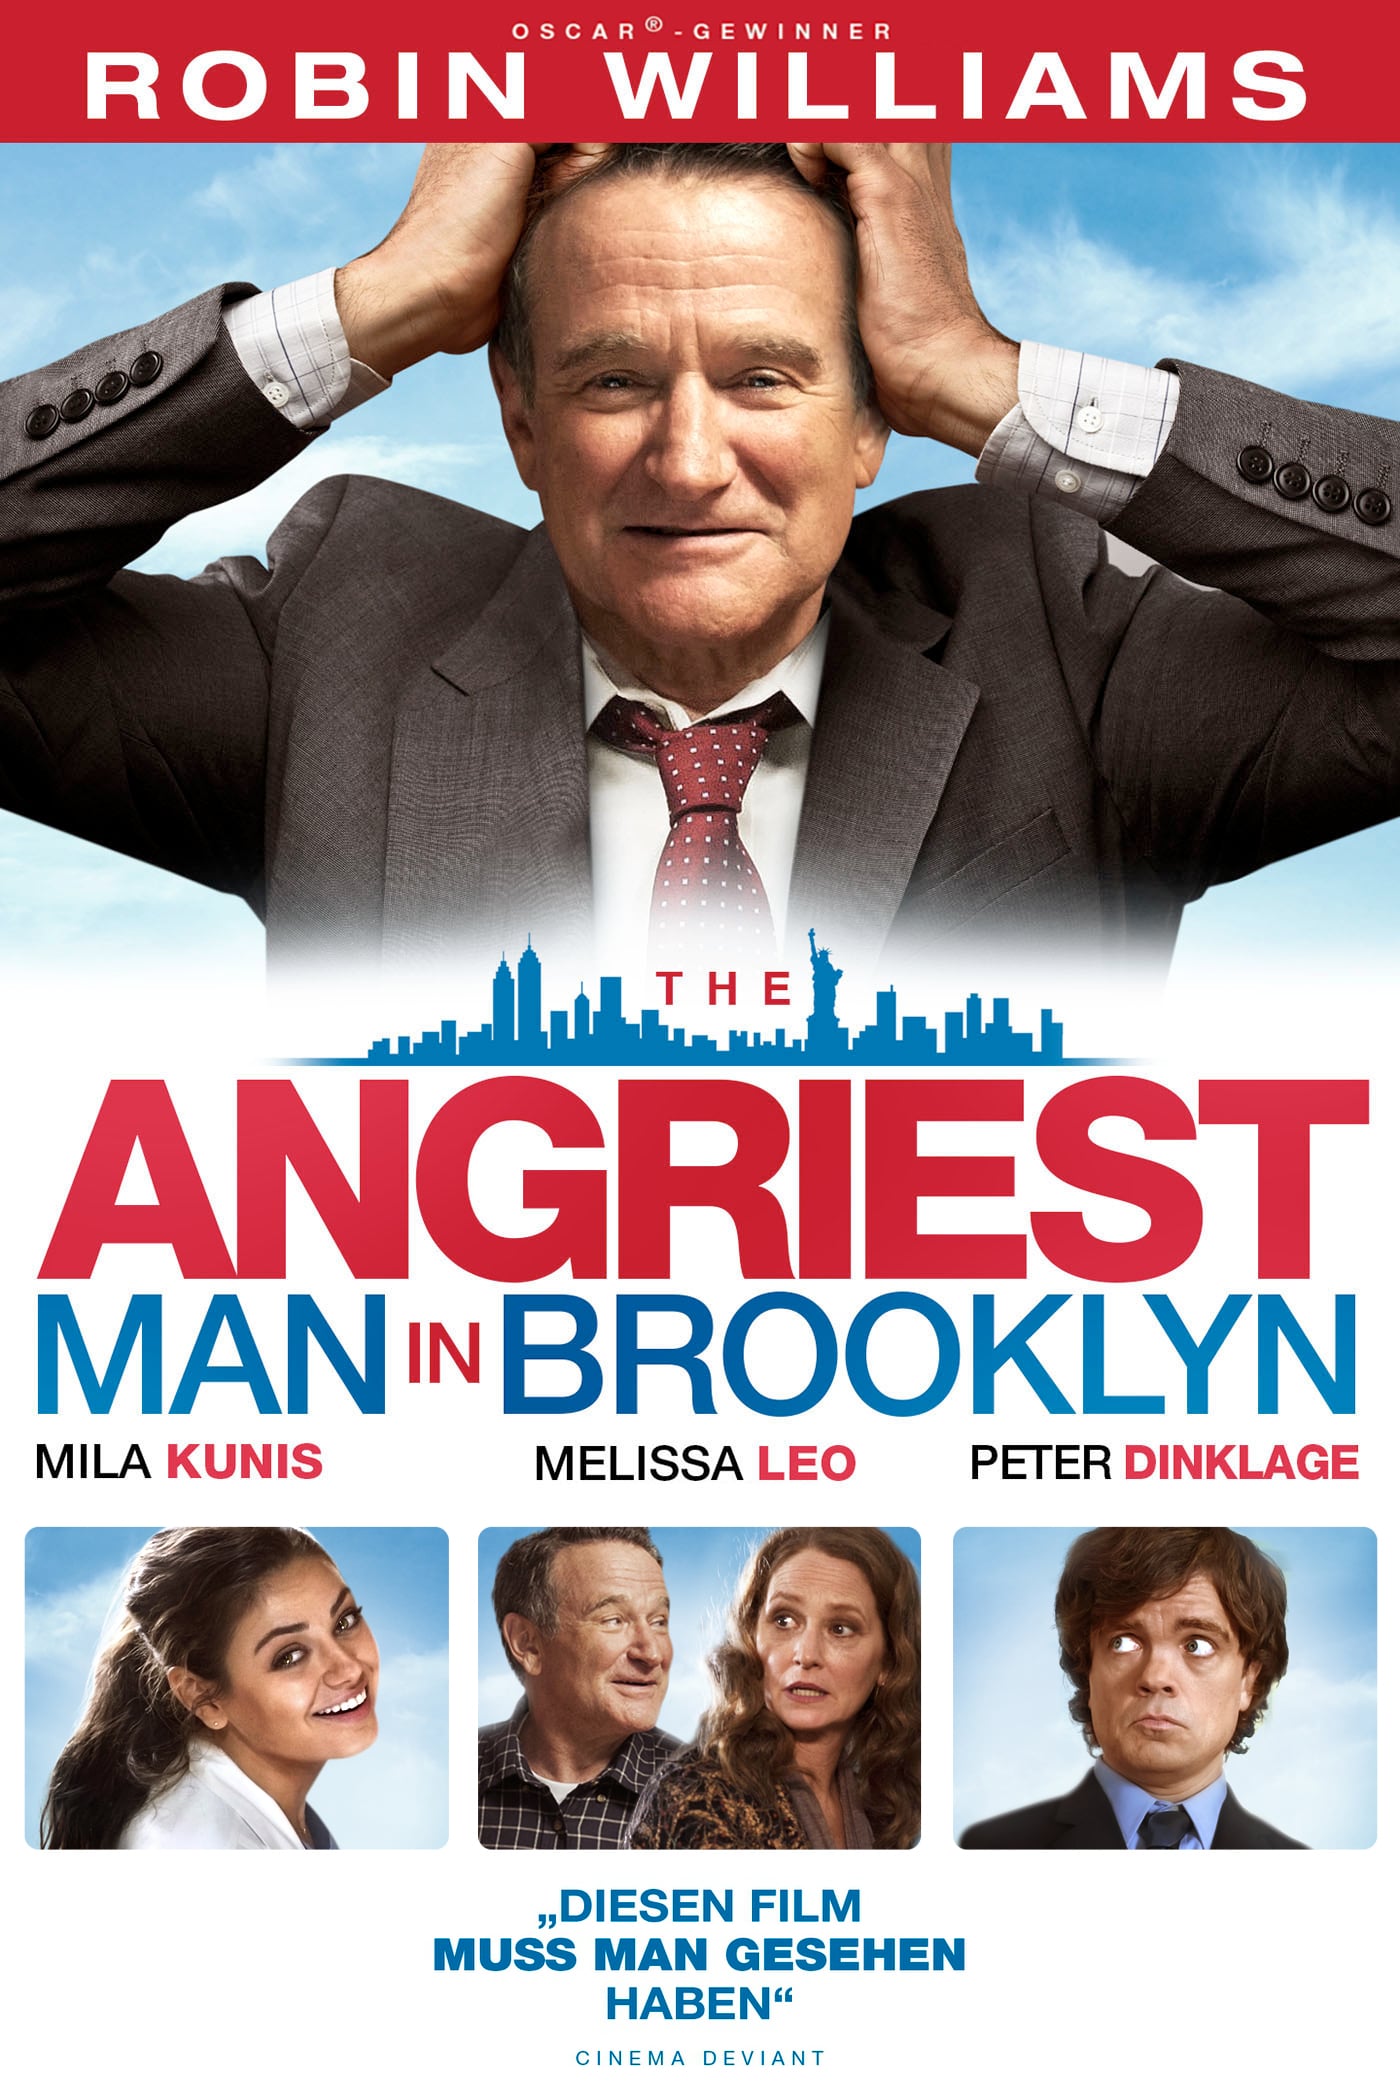 Plakat von "The Angriest Man in Brooklyn"